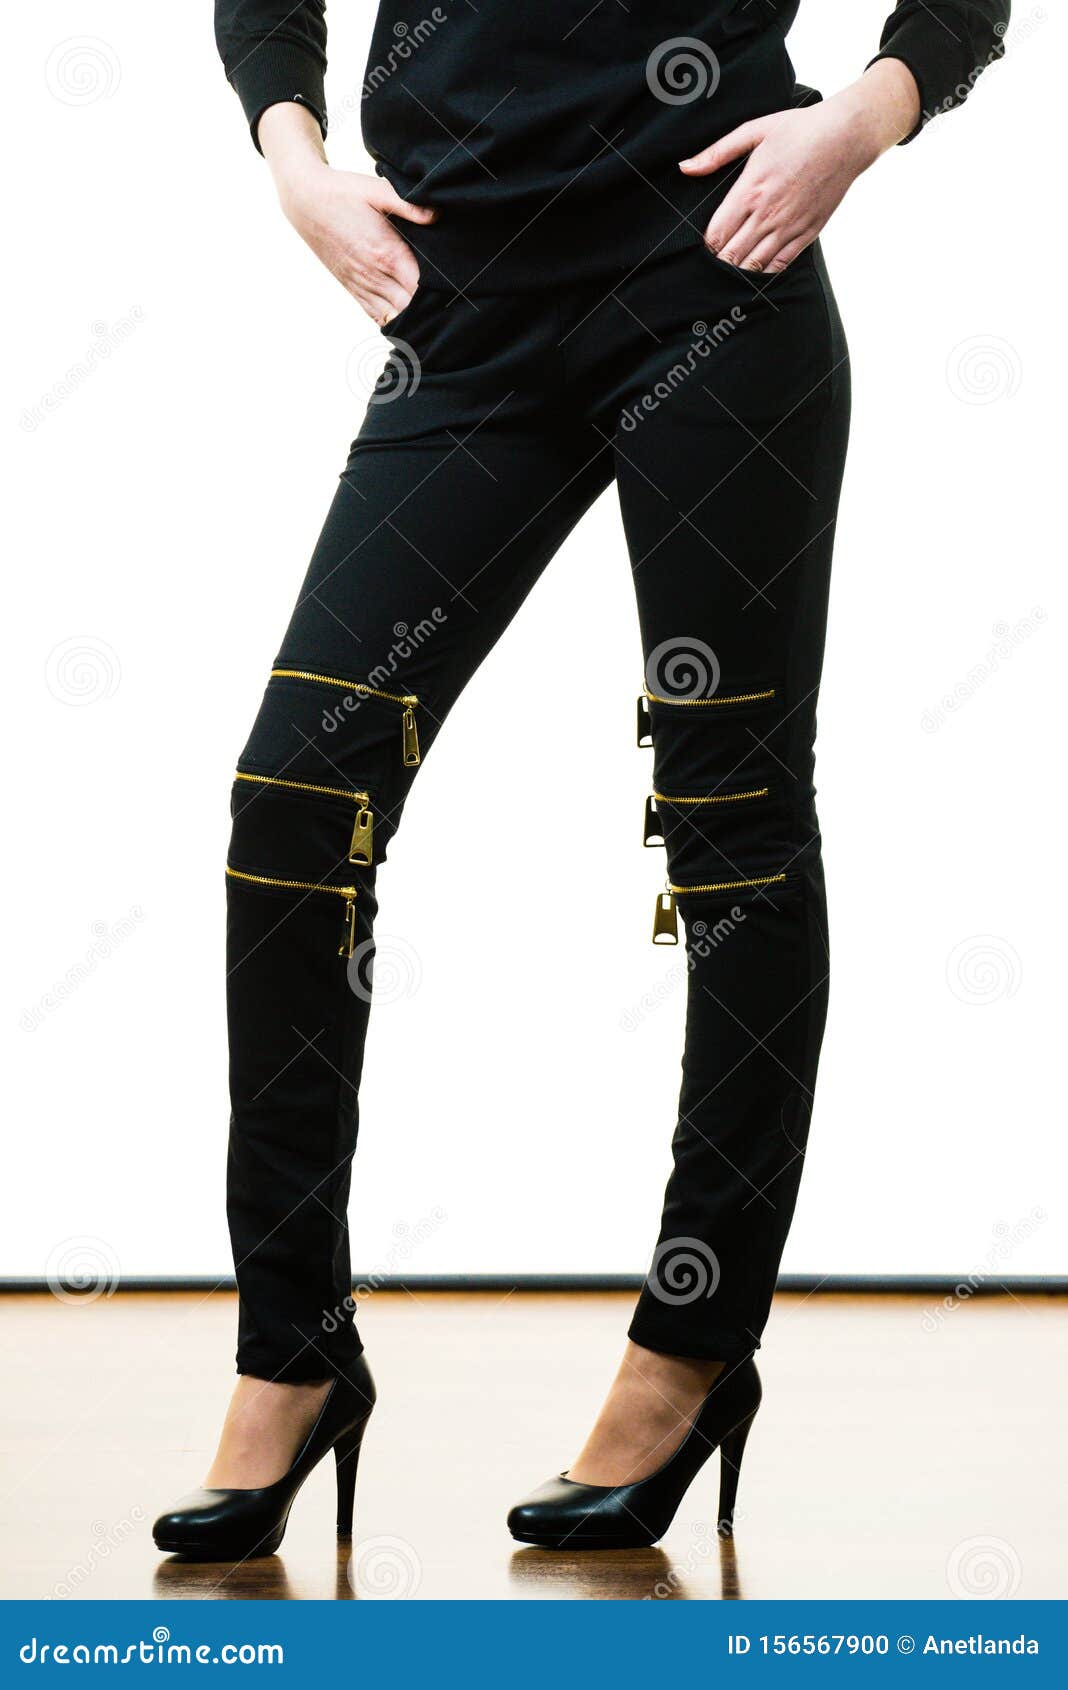 analog karakter selv Black Jeans with High Heels Stock Photo - Image of detail, fashion:  156567900